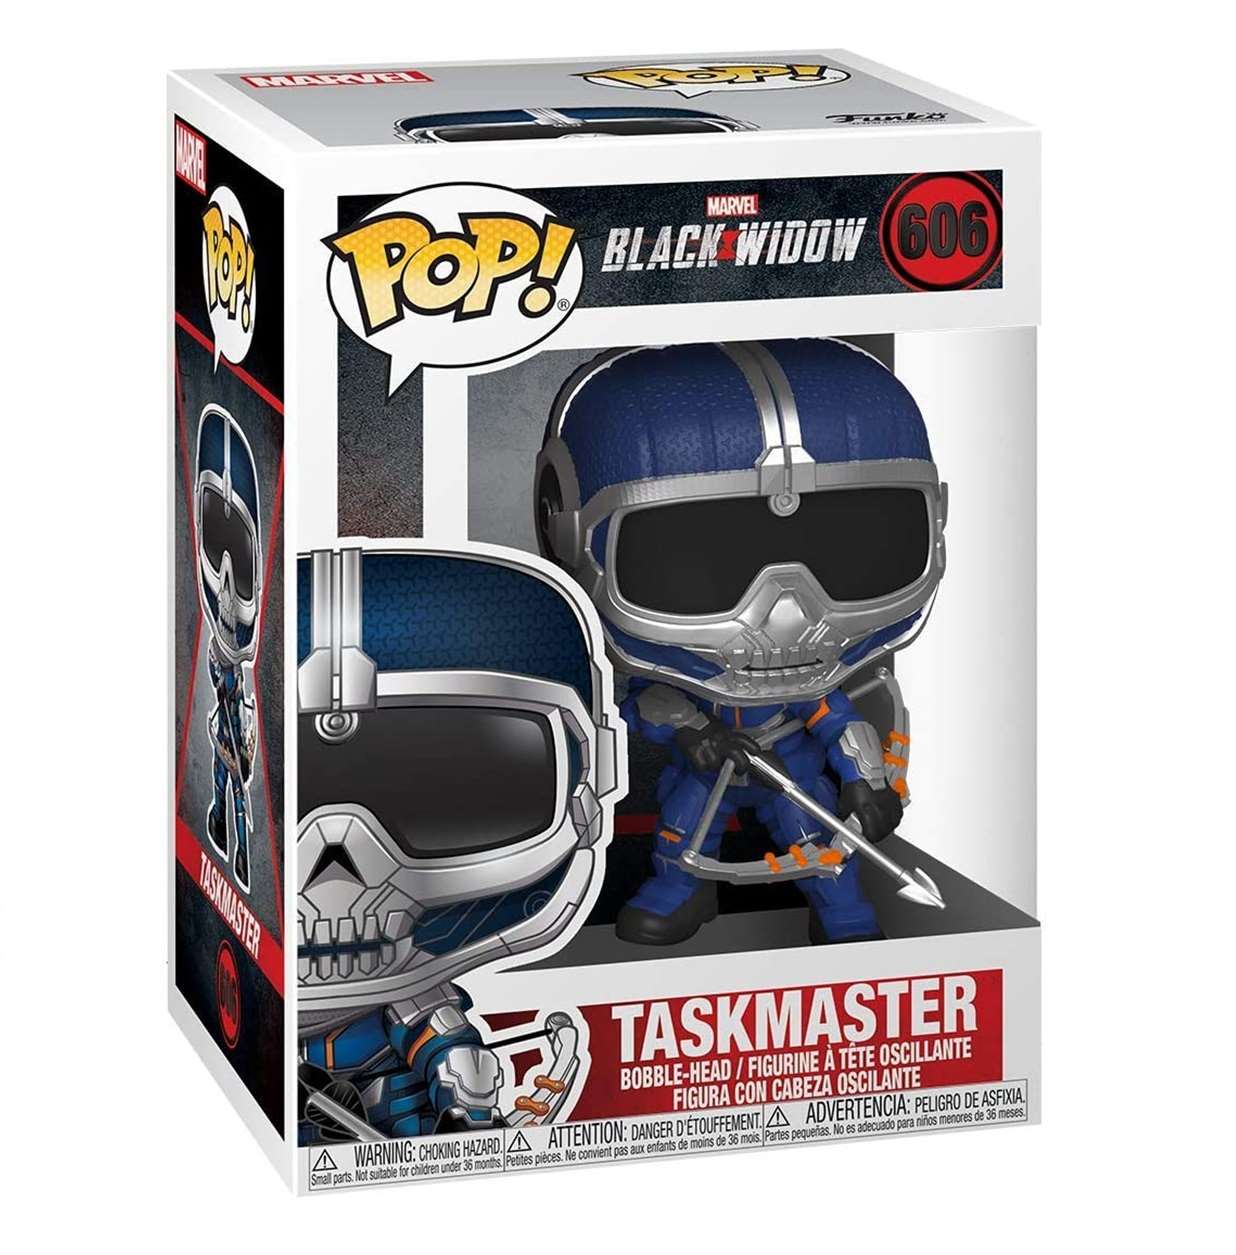 Taskmaster #606 Figura Marvel Black Widow Funko Pop!